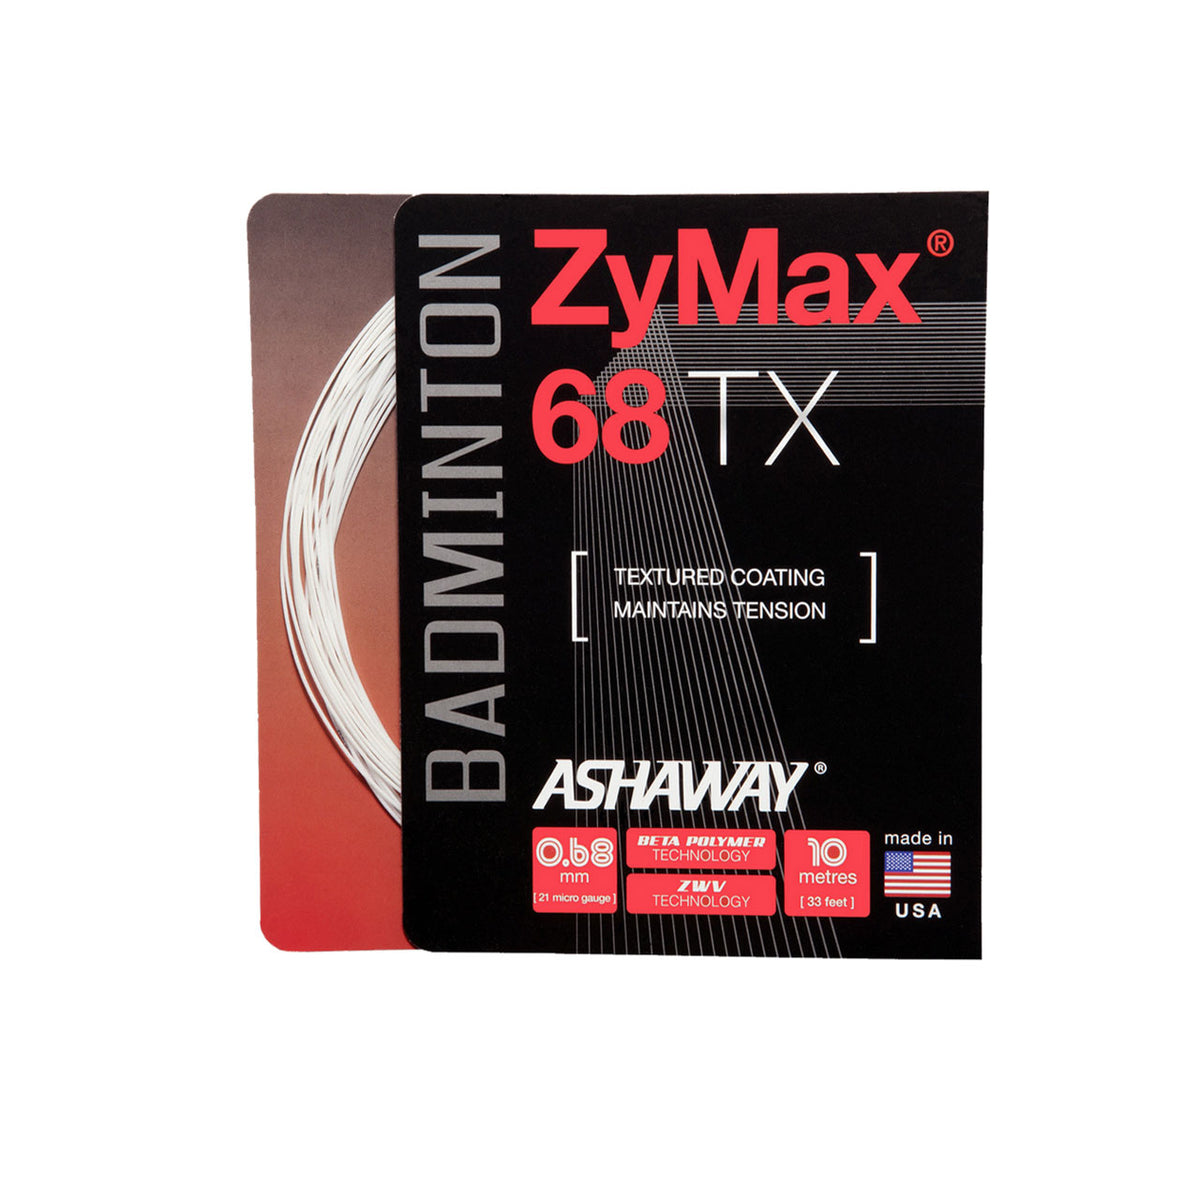 Ashaway Zymax 68TX String (10m Set) White